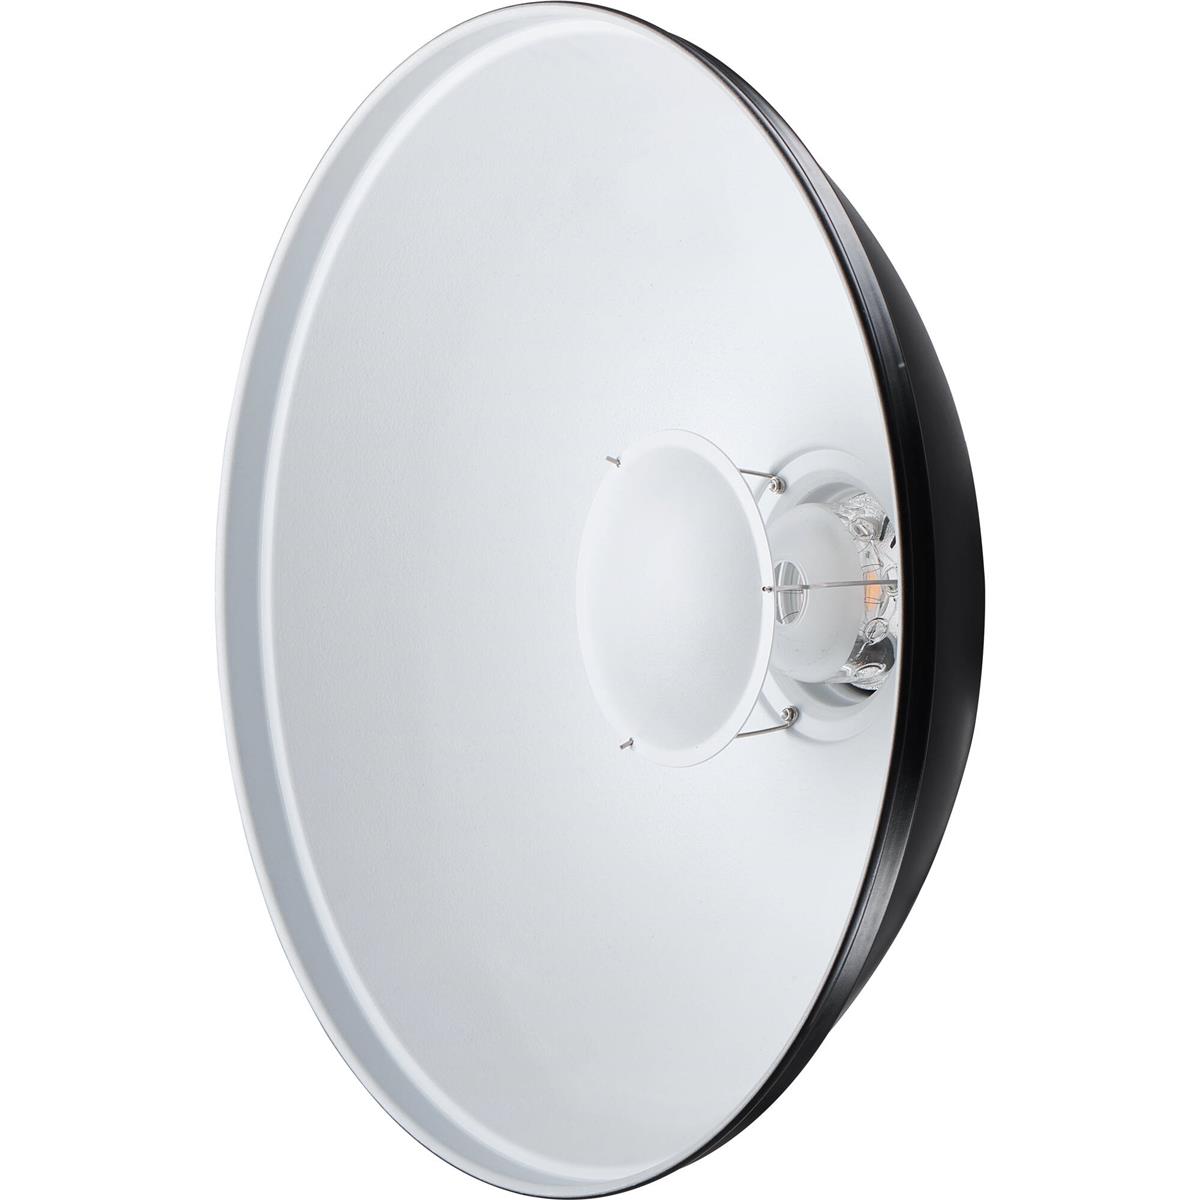 

Jinbei QZ-50 Radar Reflector Beauty Dish